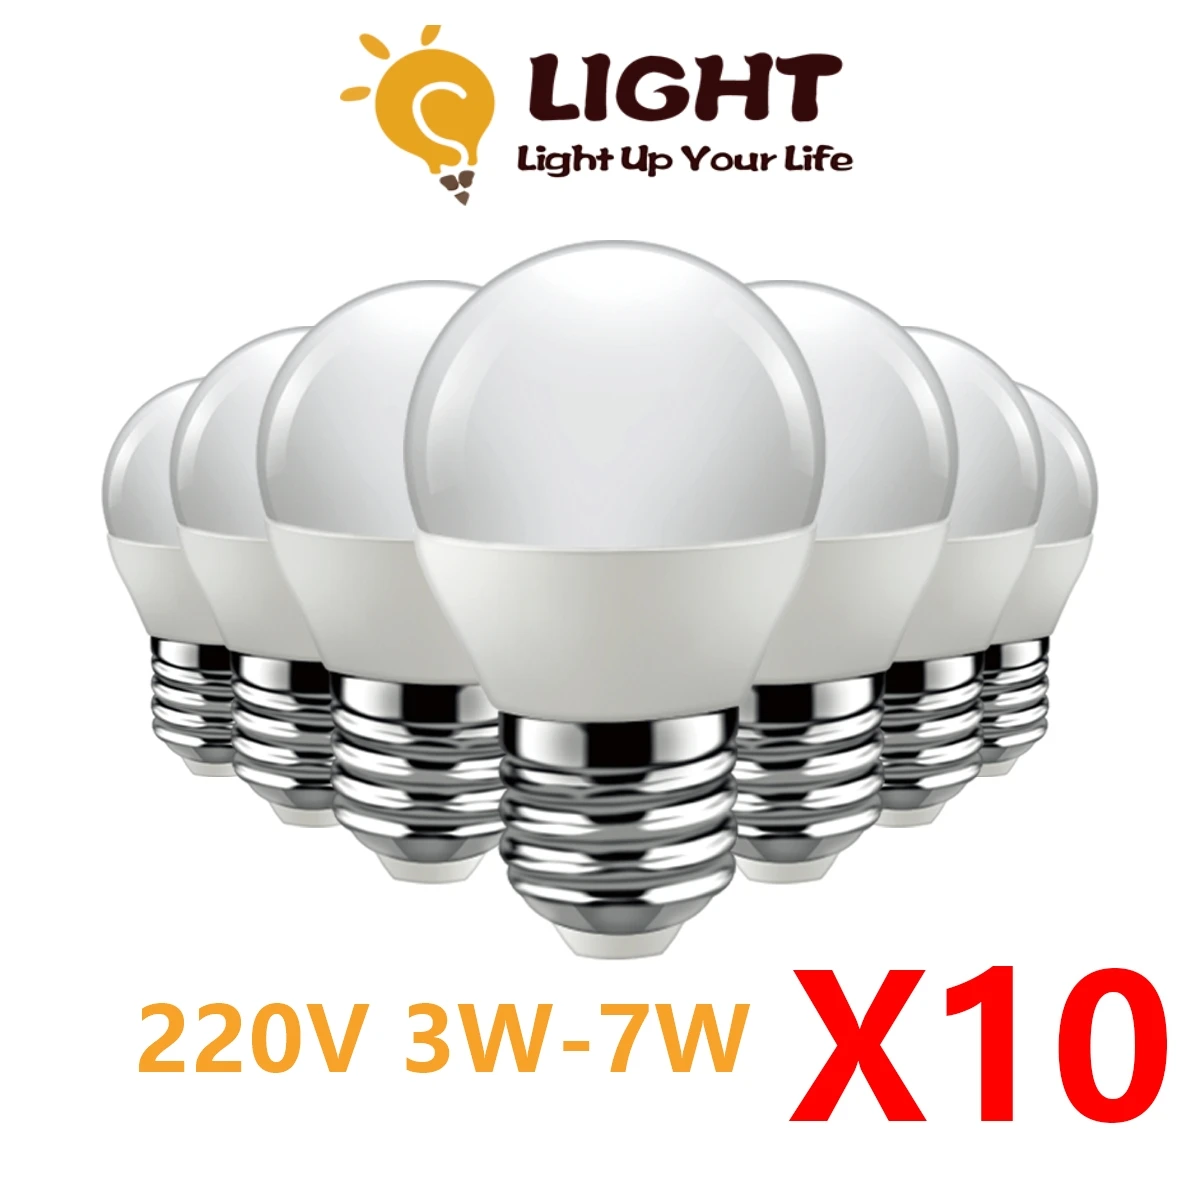 Tanie 10 sztuk lampy z żarówkami LED G45 E27 E14 B22